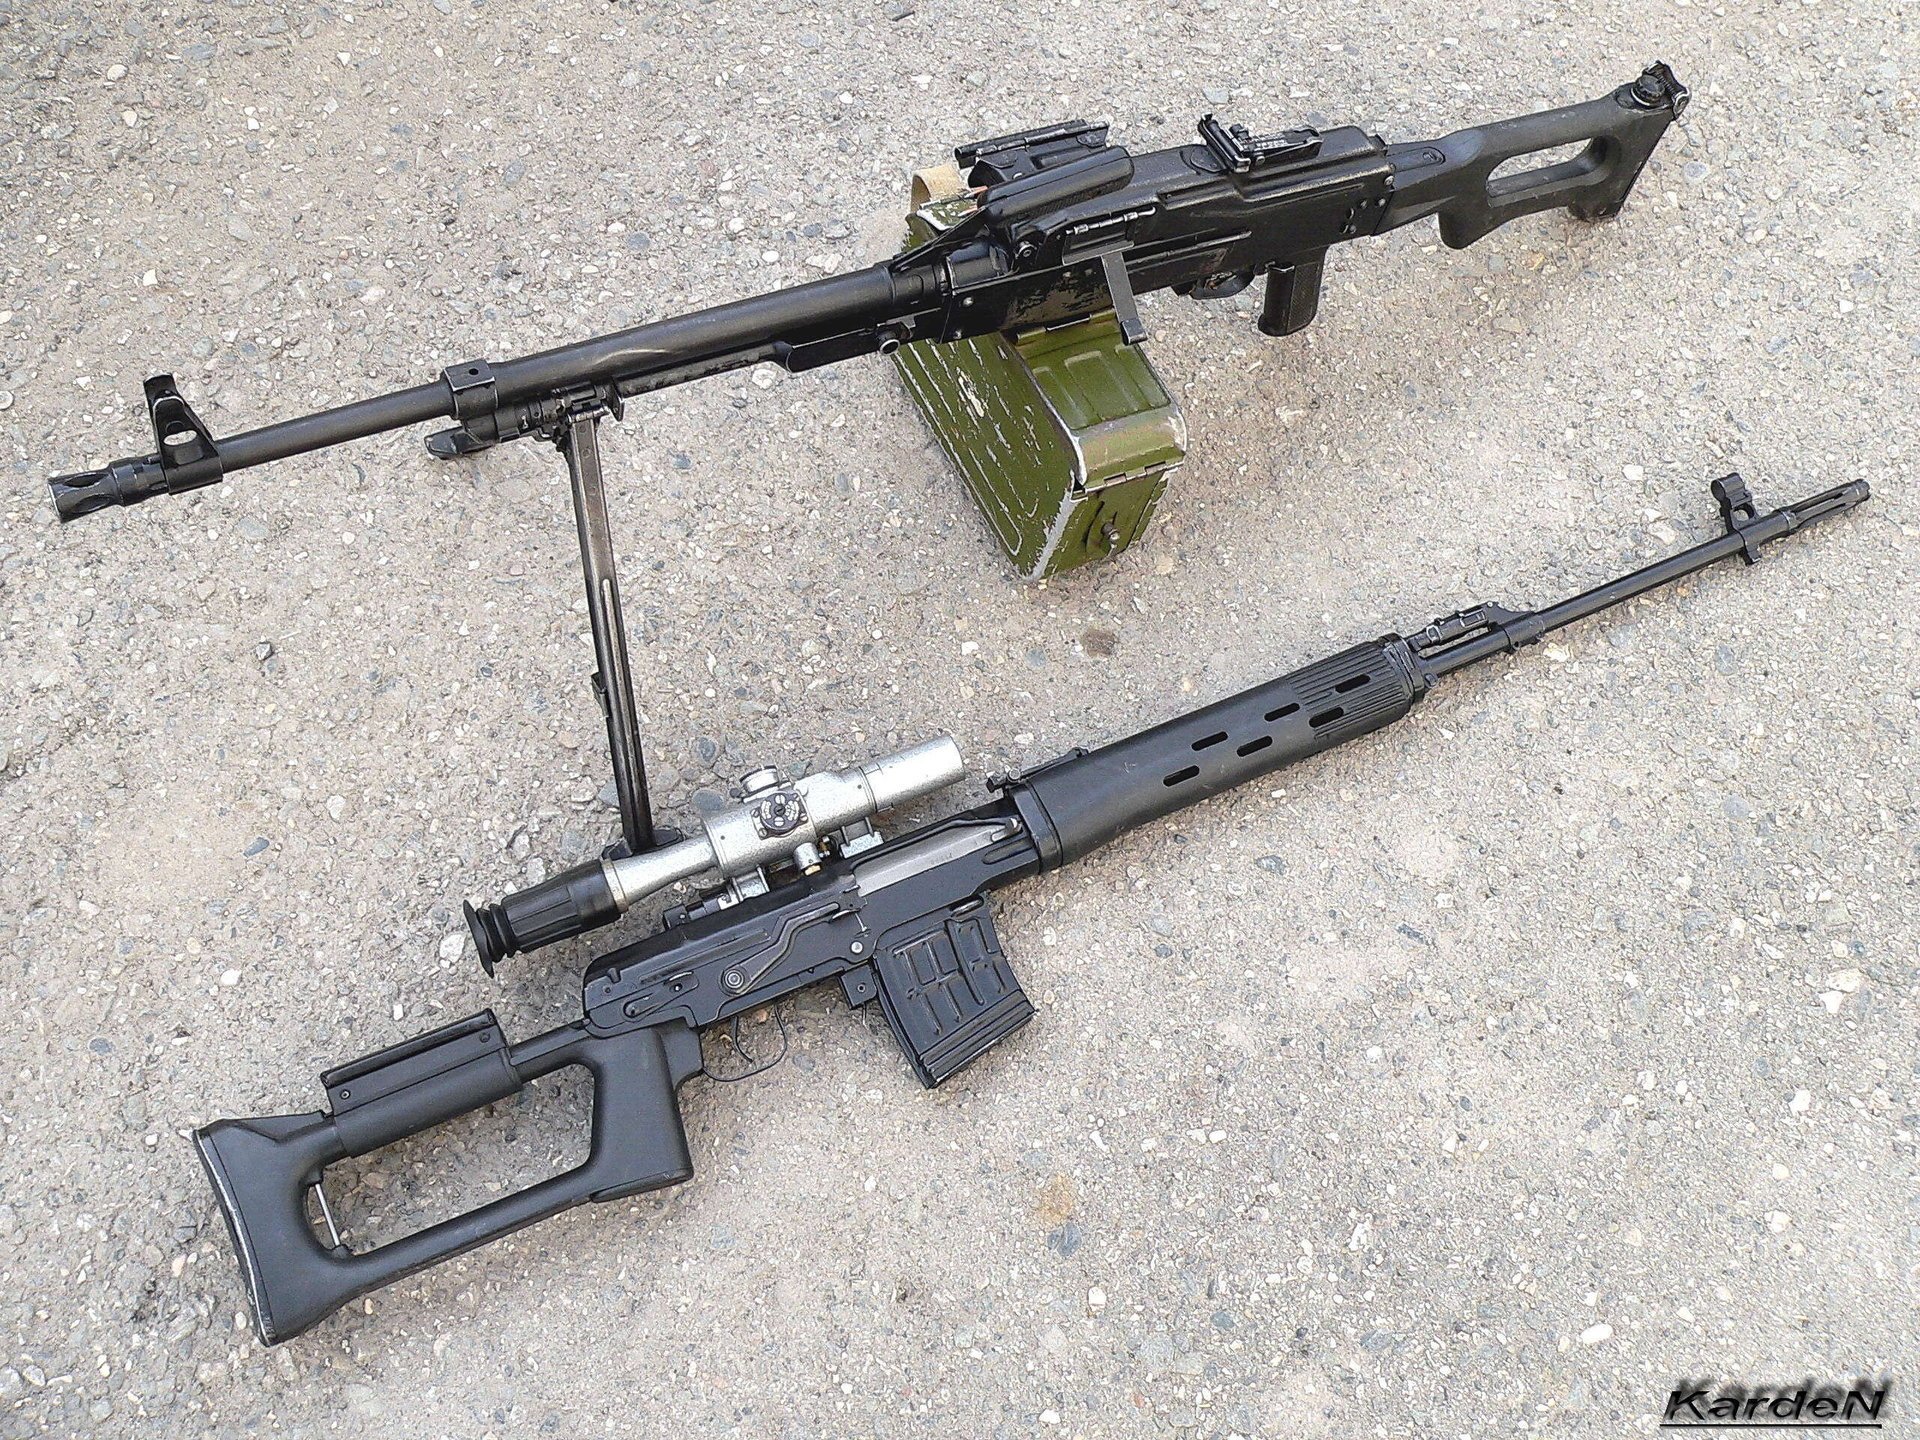 Sniper rifle and machine gun